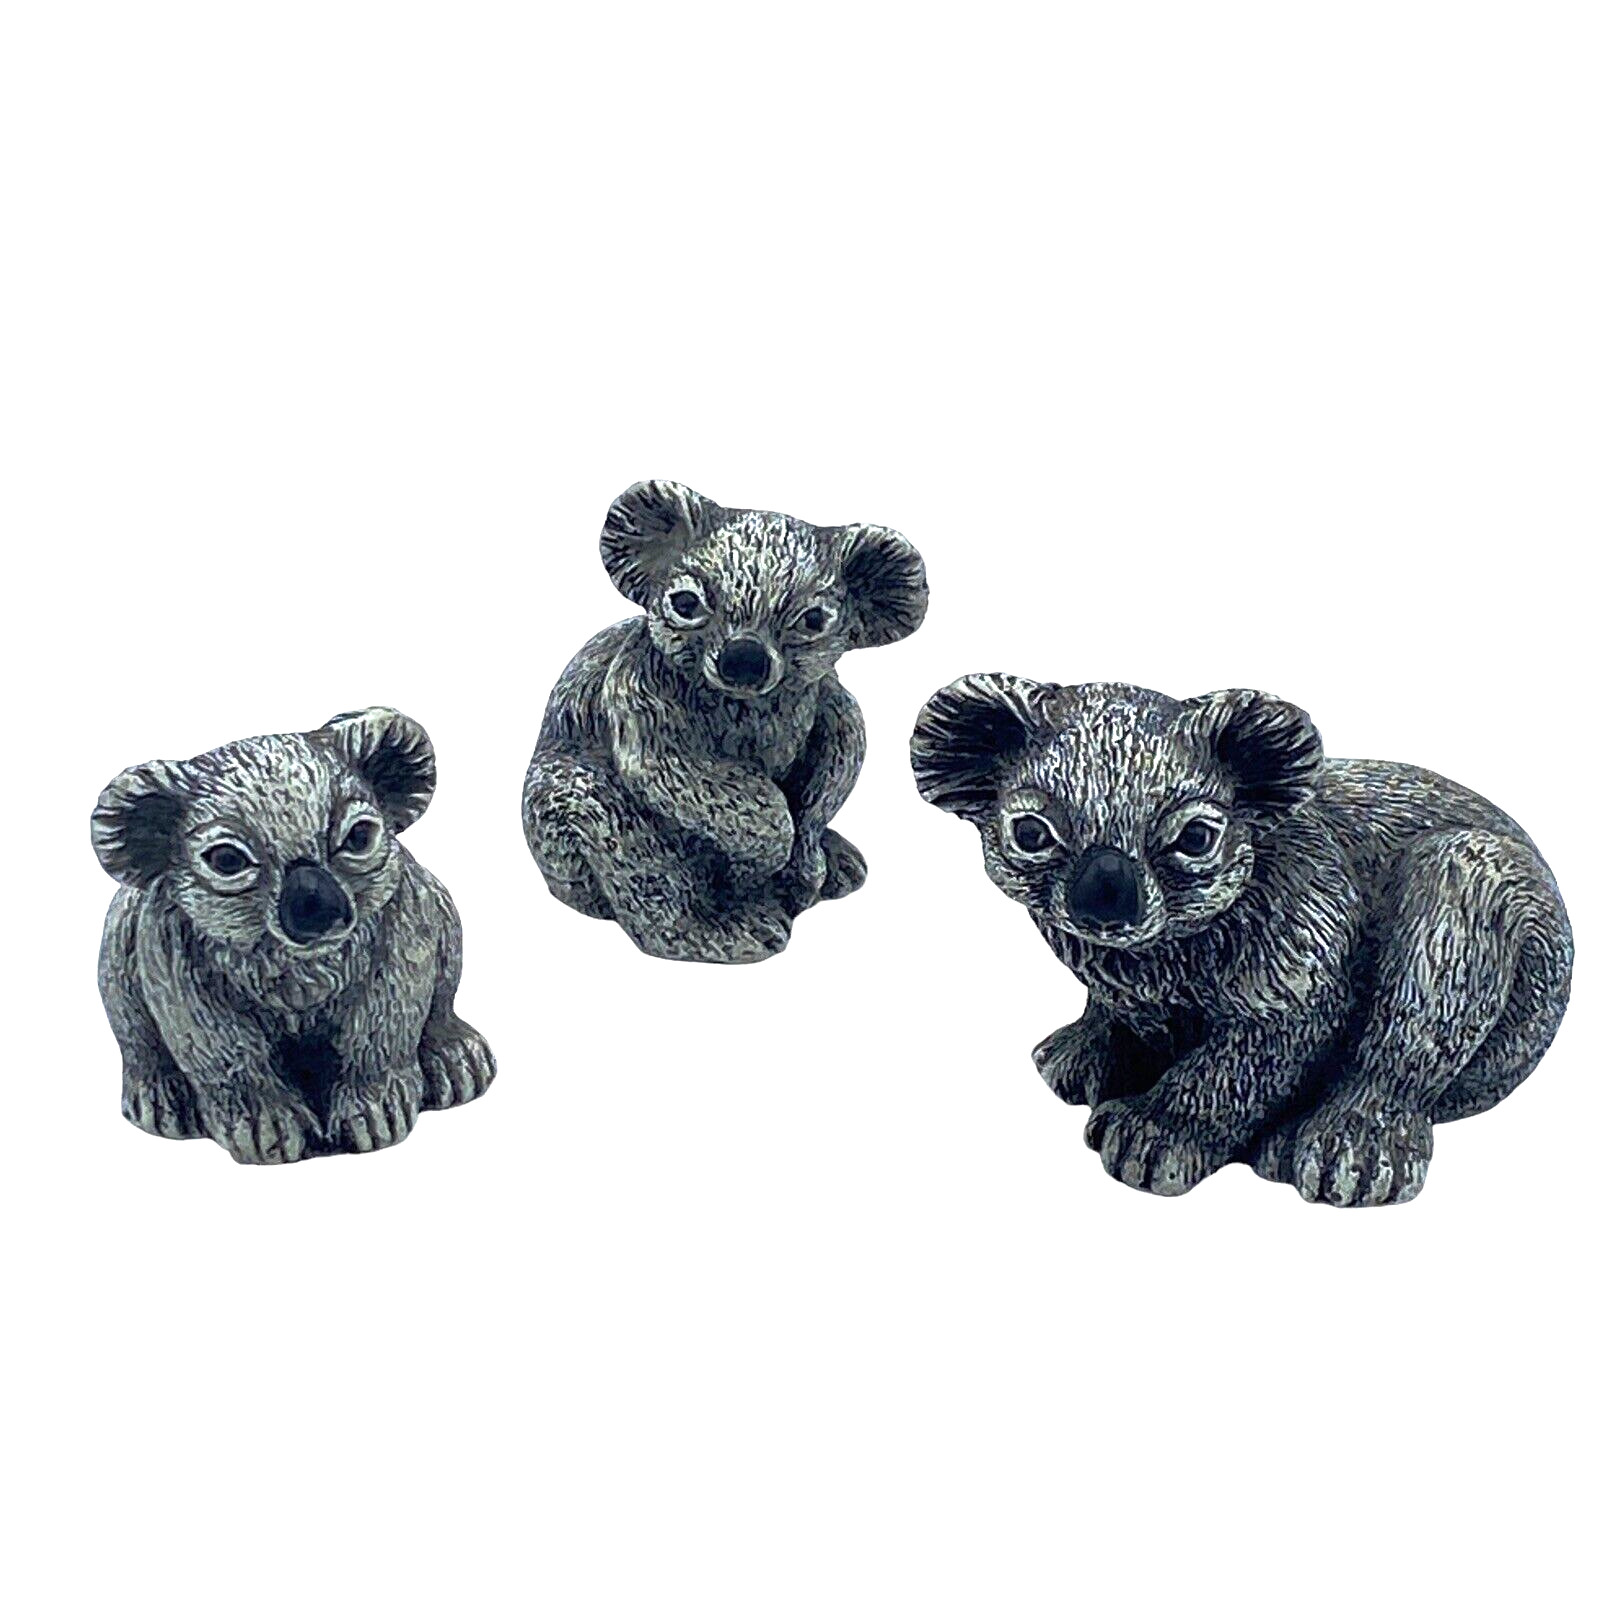 Vintage 3 Stone Koala Bear Figures Sitting  Grey & Black Decor Small